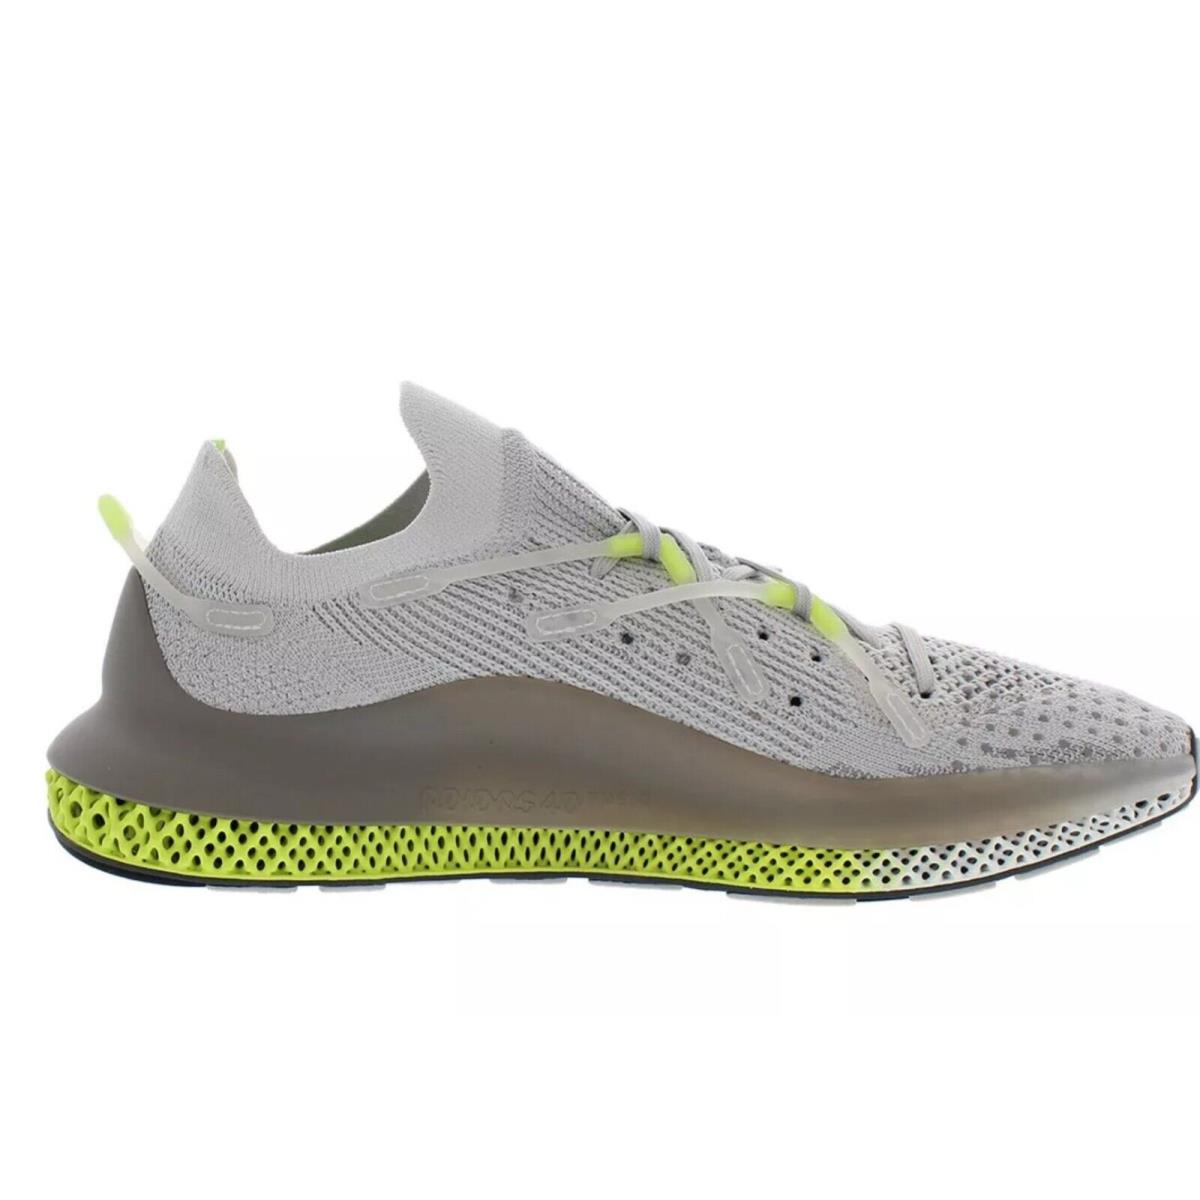 Adidas Originals 4D Fusio Mens Shoes Size 14 Color: Grey/off-white/yellow - Main: Grey